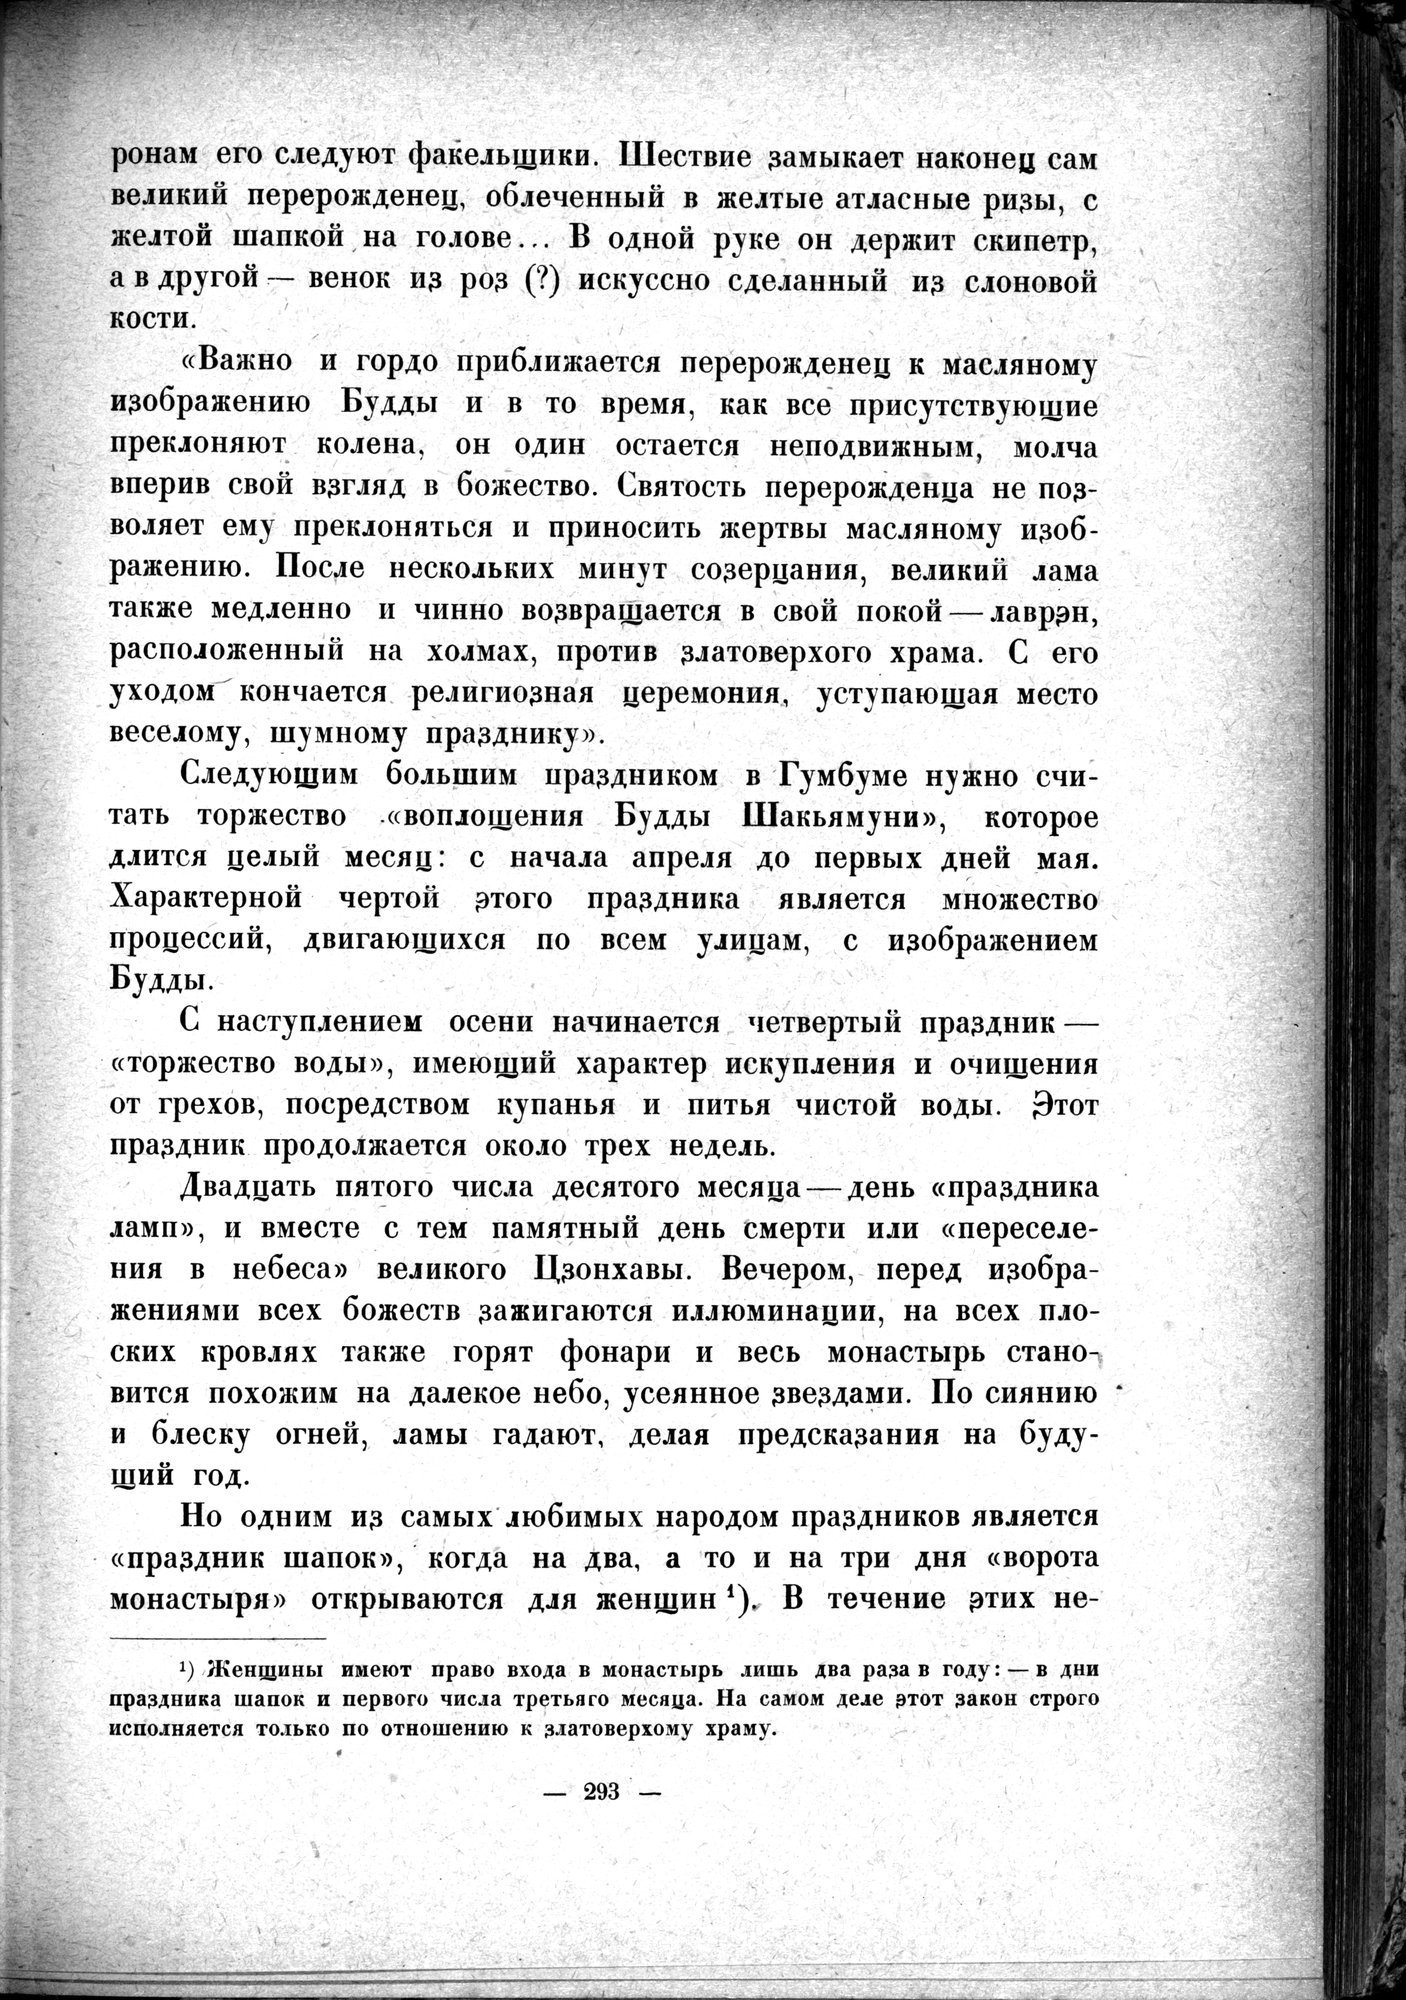 Mongoliya i Amdo i mertby gorod Khara-Khoto : vol.1 / Page 343 (Grayscale High Resolution Image)